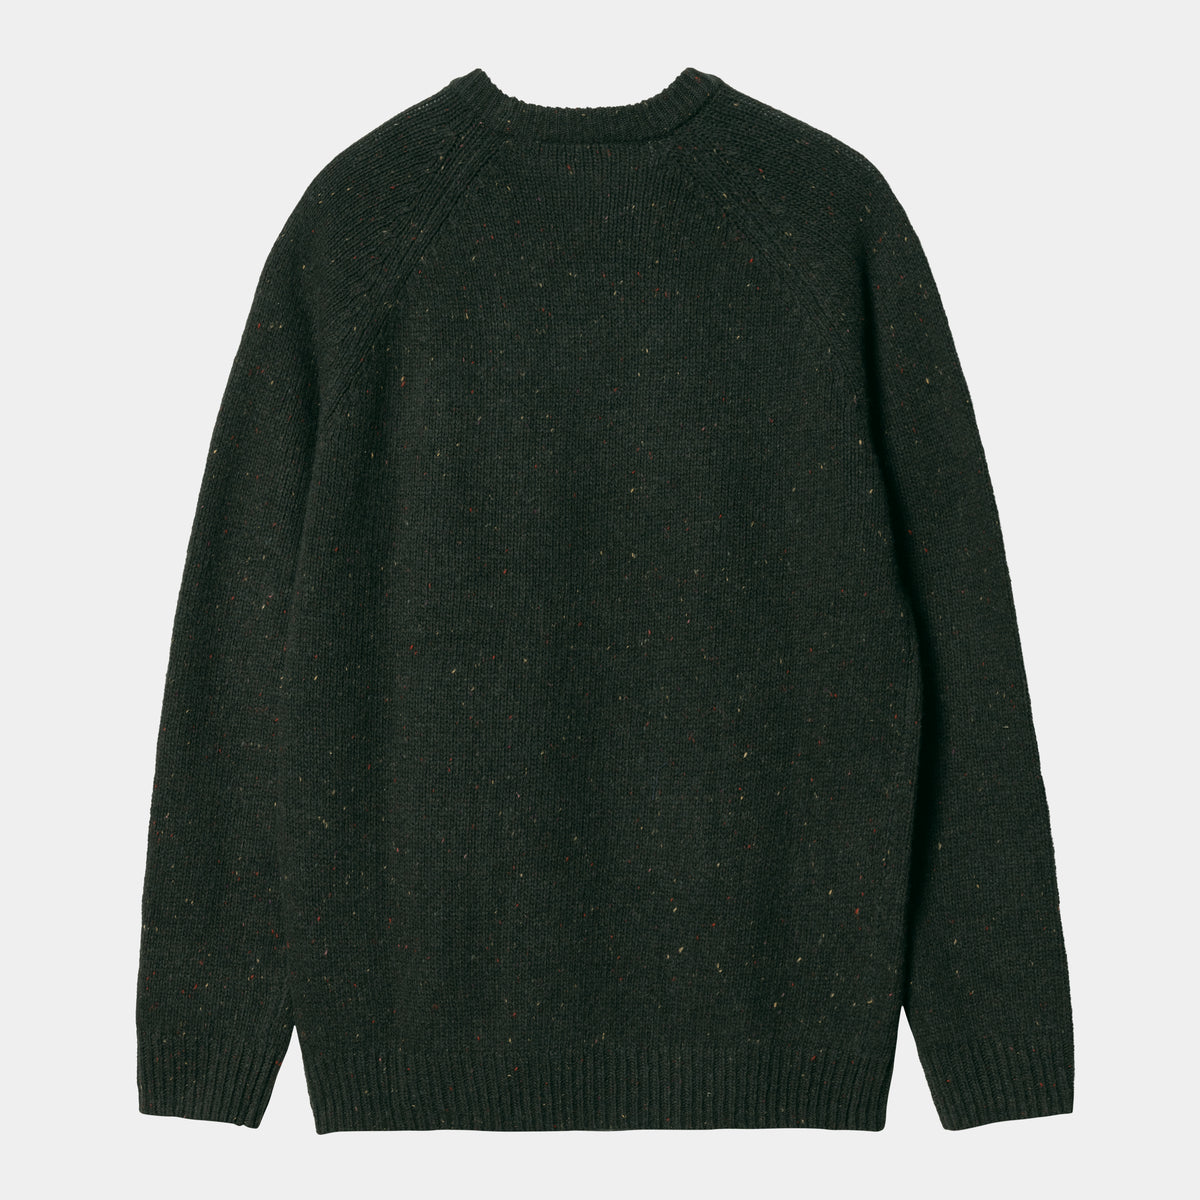 Carhartt Angelistic Sweater - Speckled Dark Cedar